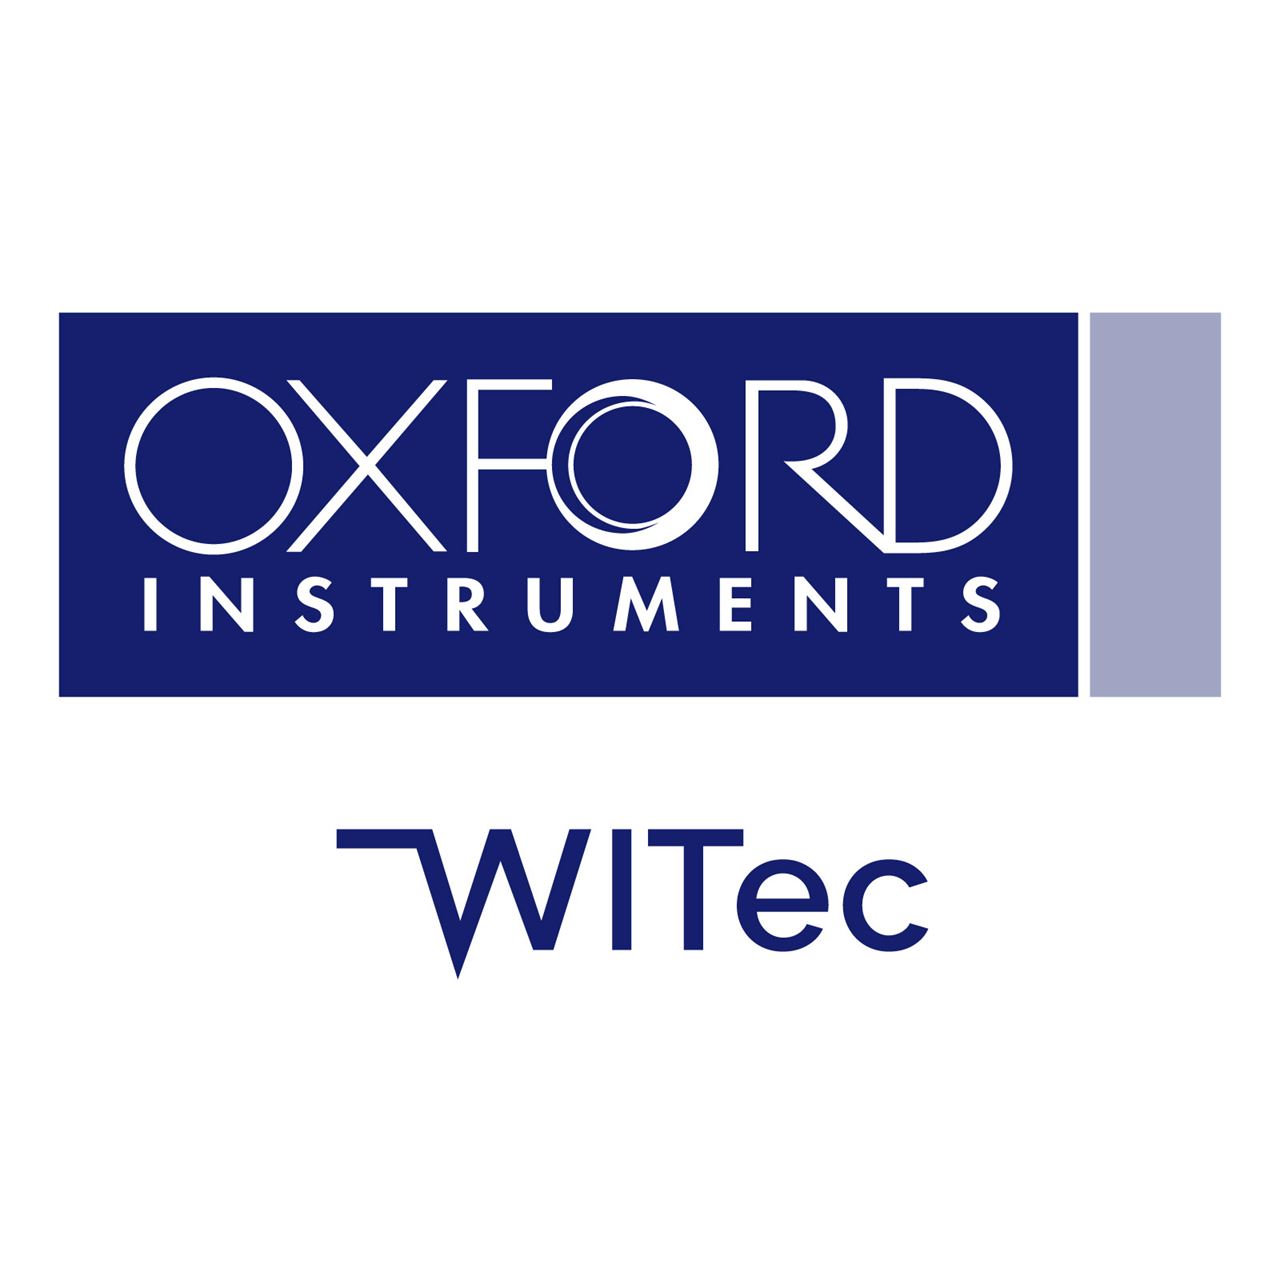 Oxford Instruments WiTec logos